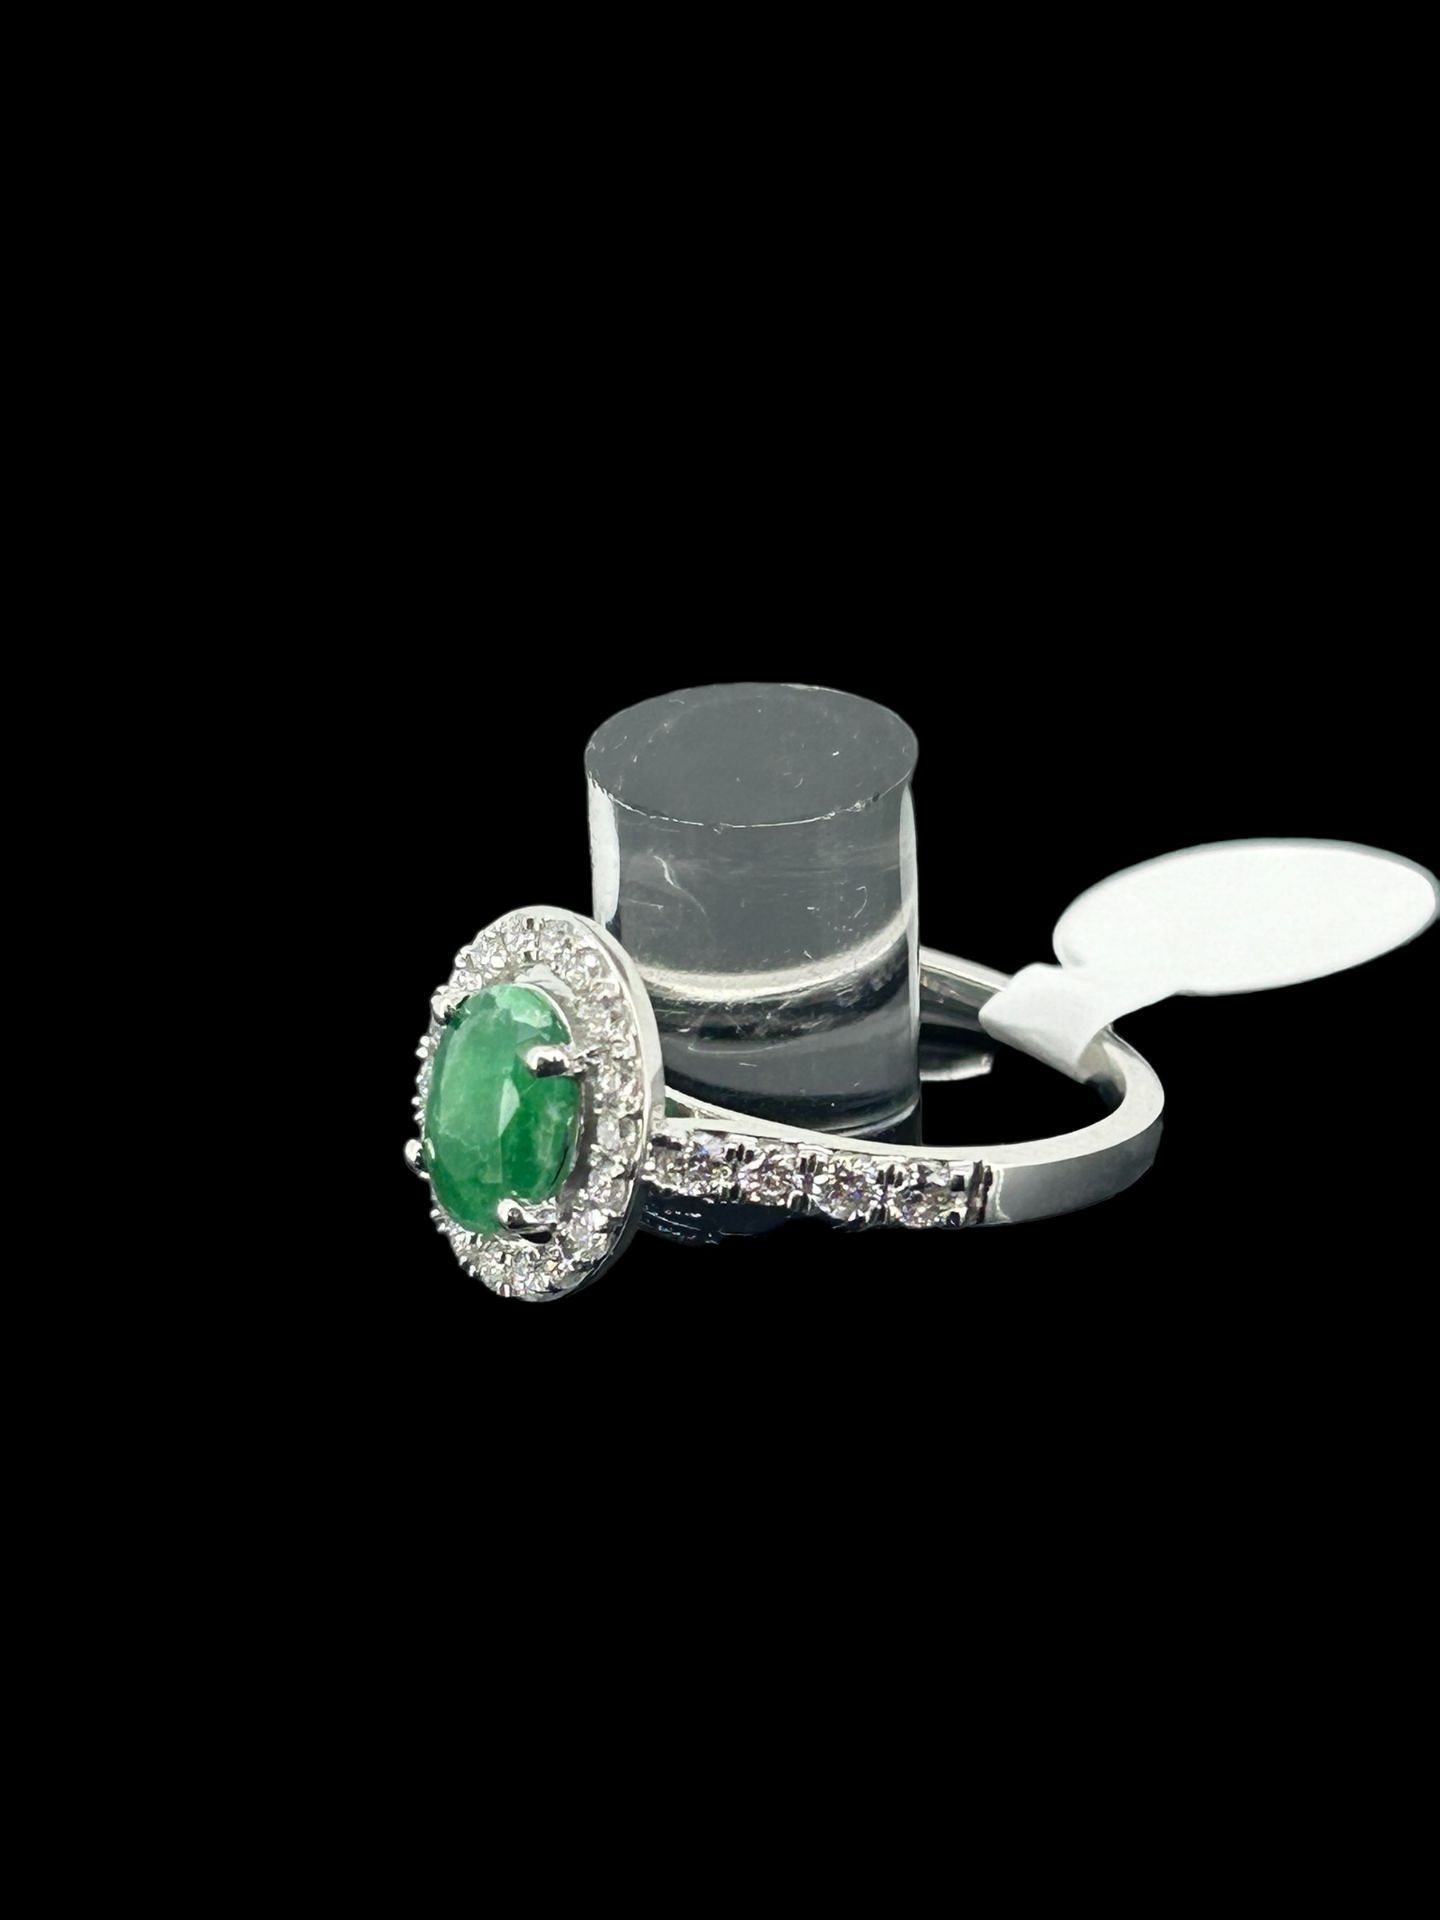 9 carat white gold diamond and emerald ring